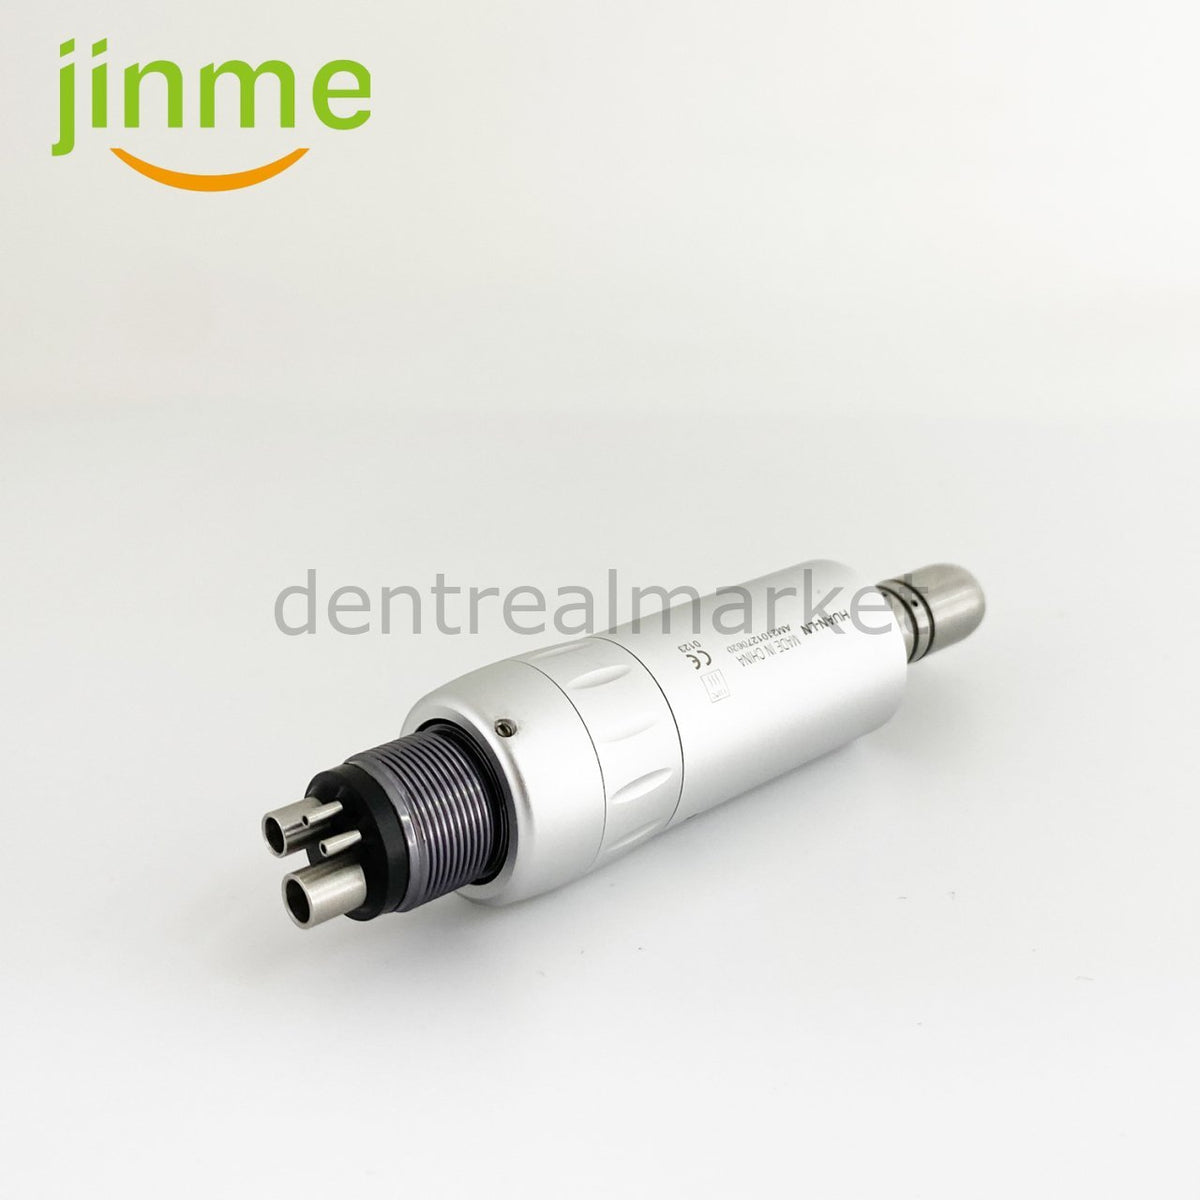 DentrealStore - Dentreal Drm Internal Water Air Micromotor - HUAN-M4 - 4 Hole